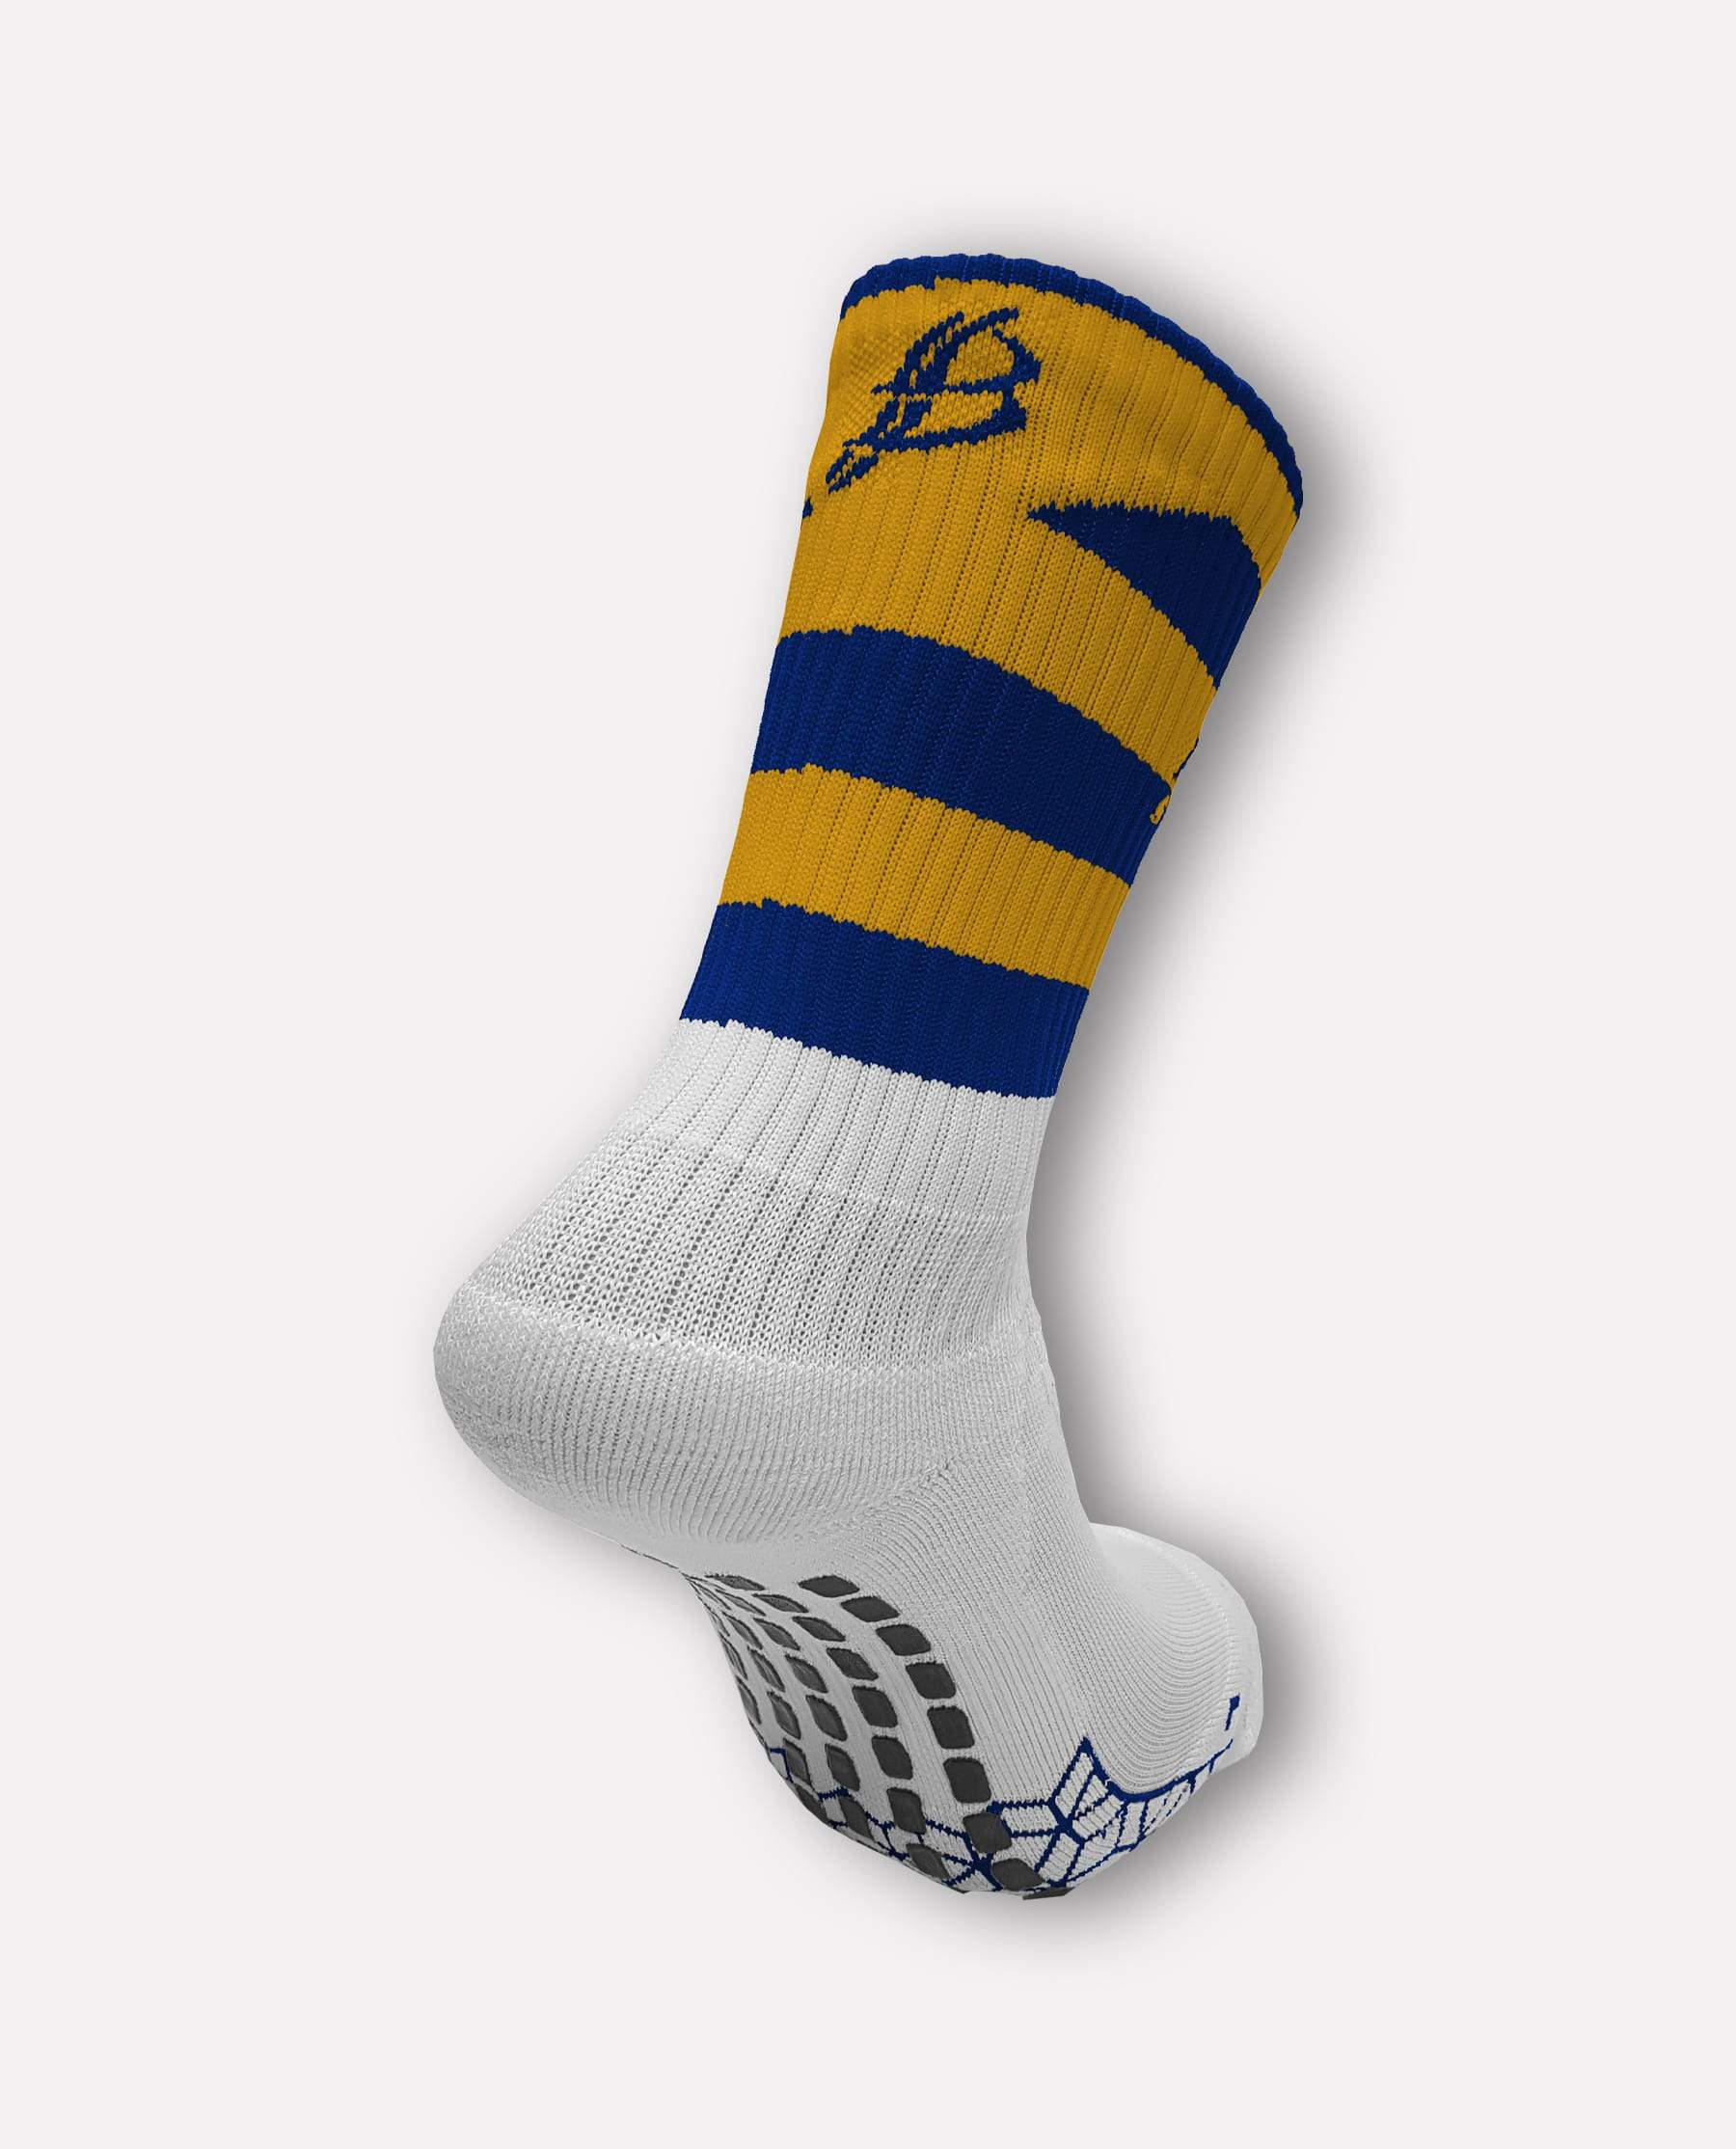 Miniz Hoops Socks (7-11)